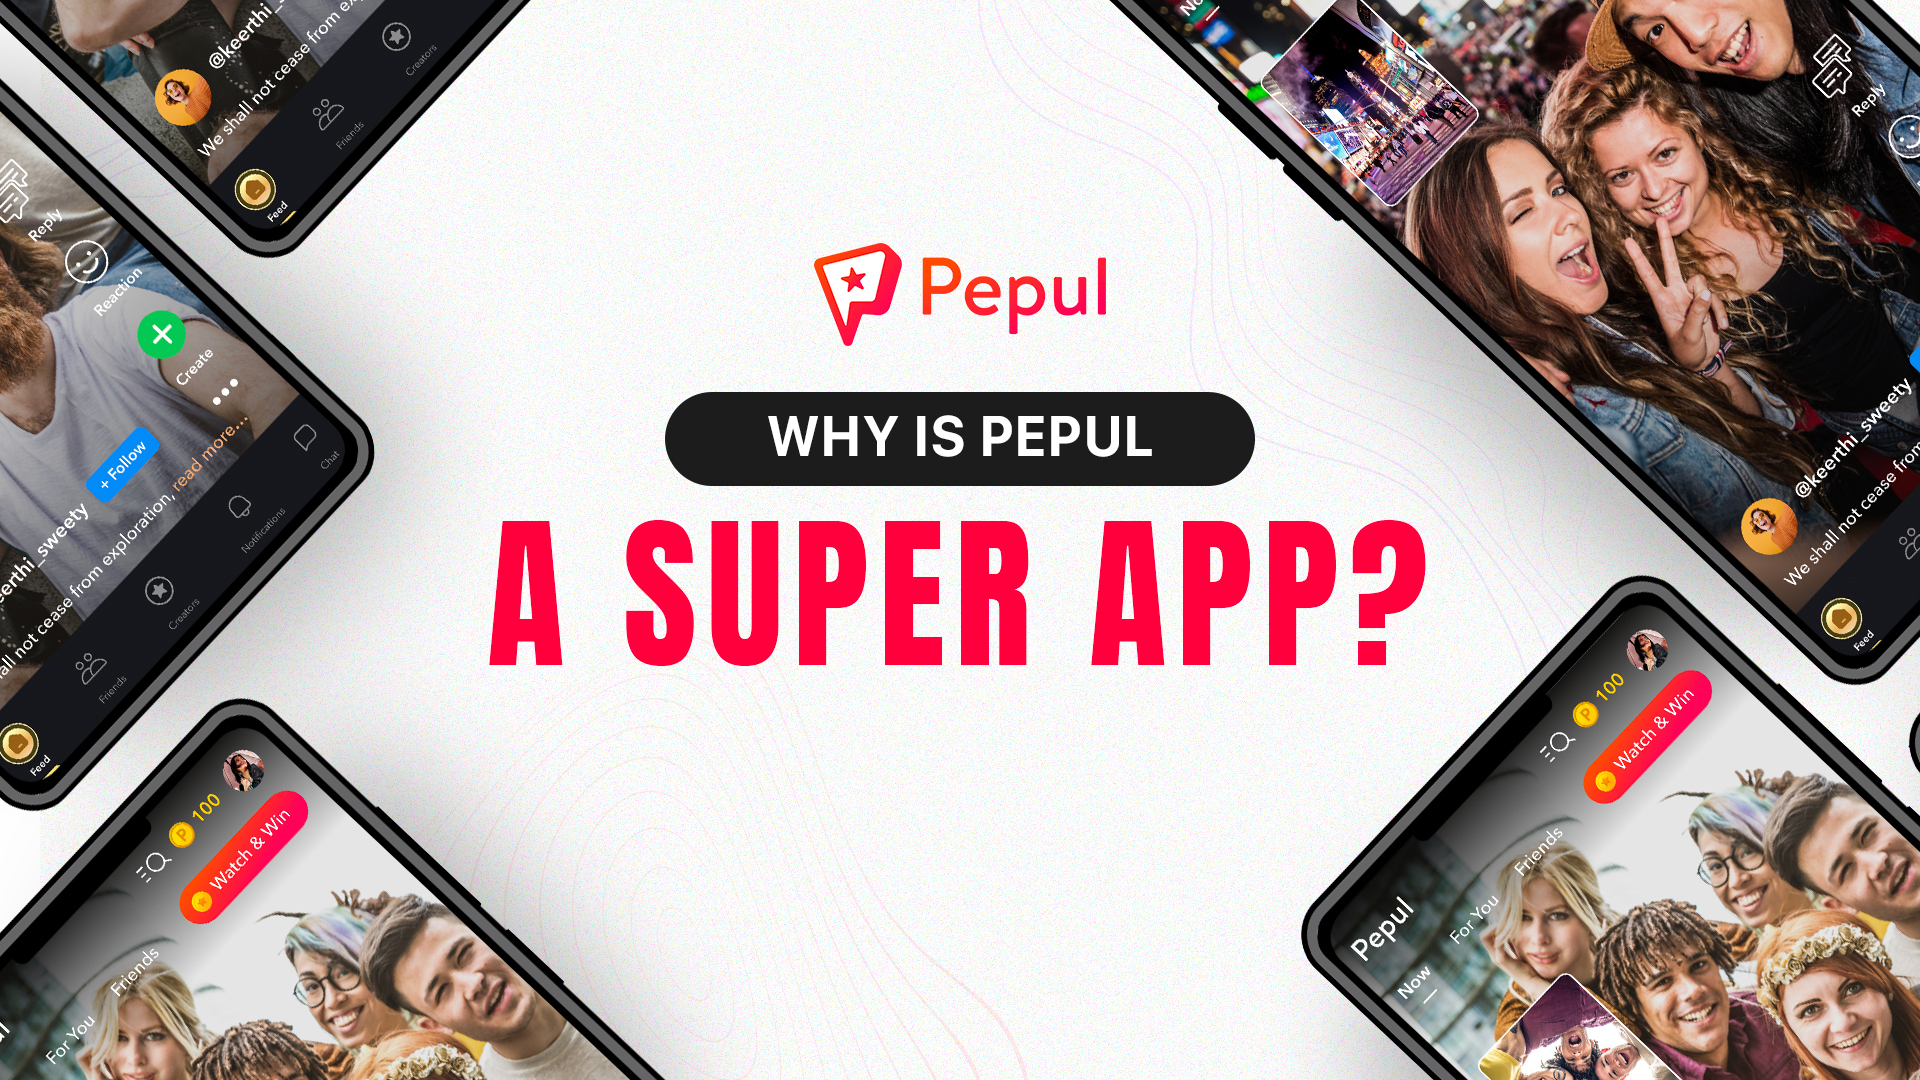 Why is Pepul Social Networking App a Super App?